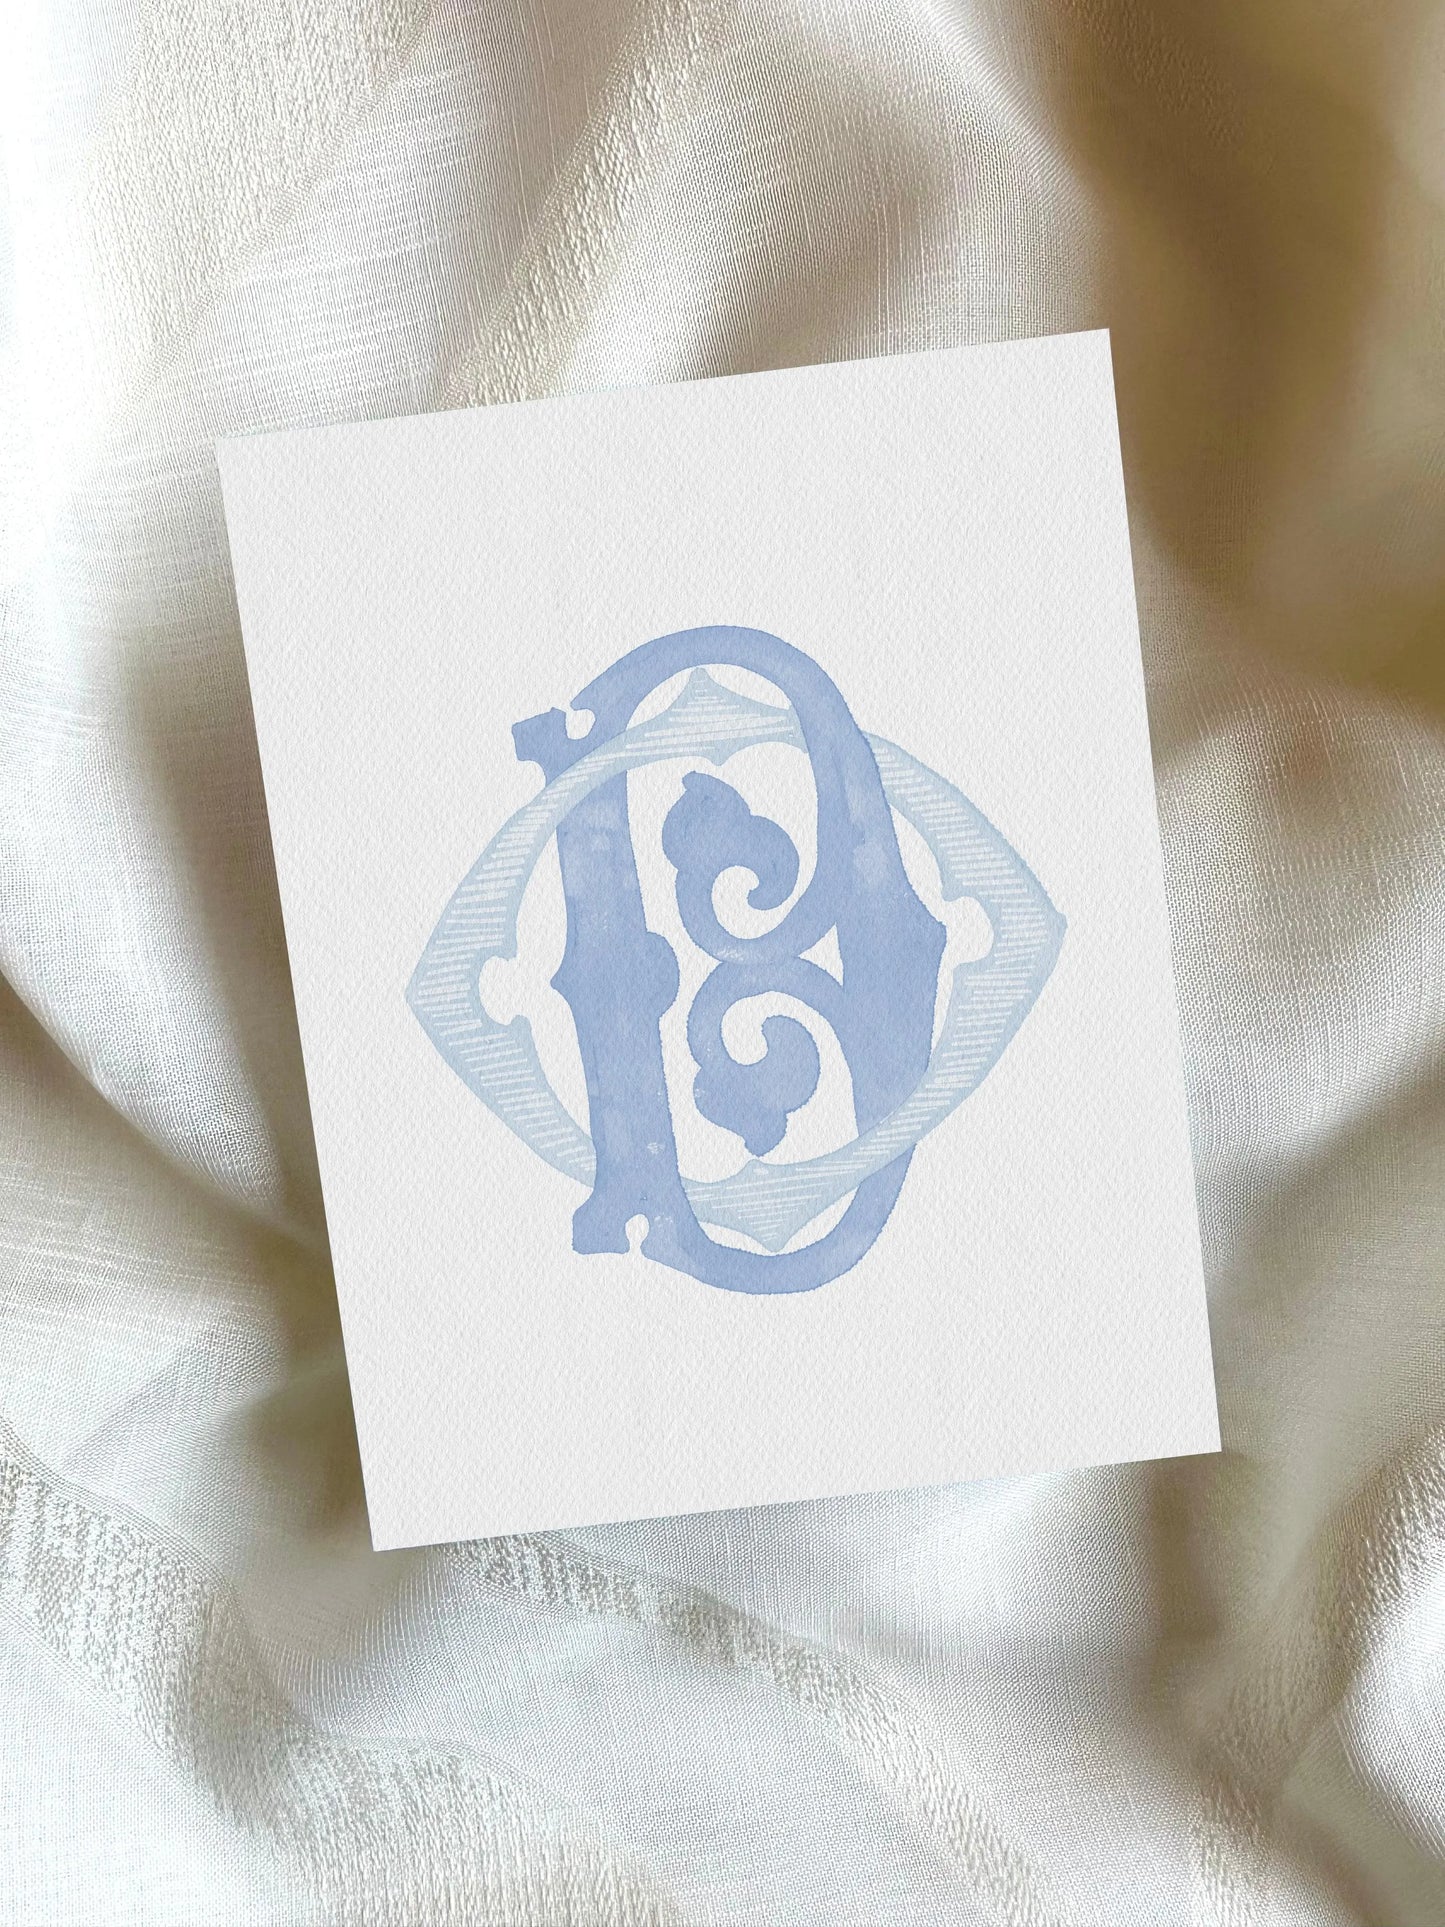 2 Letter Monogram with Letters DO | Digital Download - Wedding Monogram SVG, Personal Logo, Wedding Logo for Wedding Invitations The Wedding Crest Lab